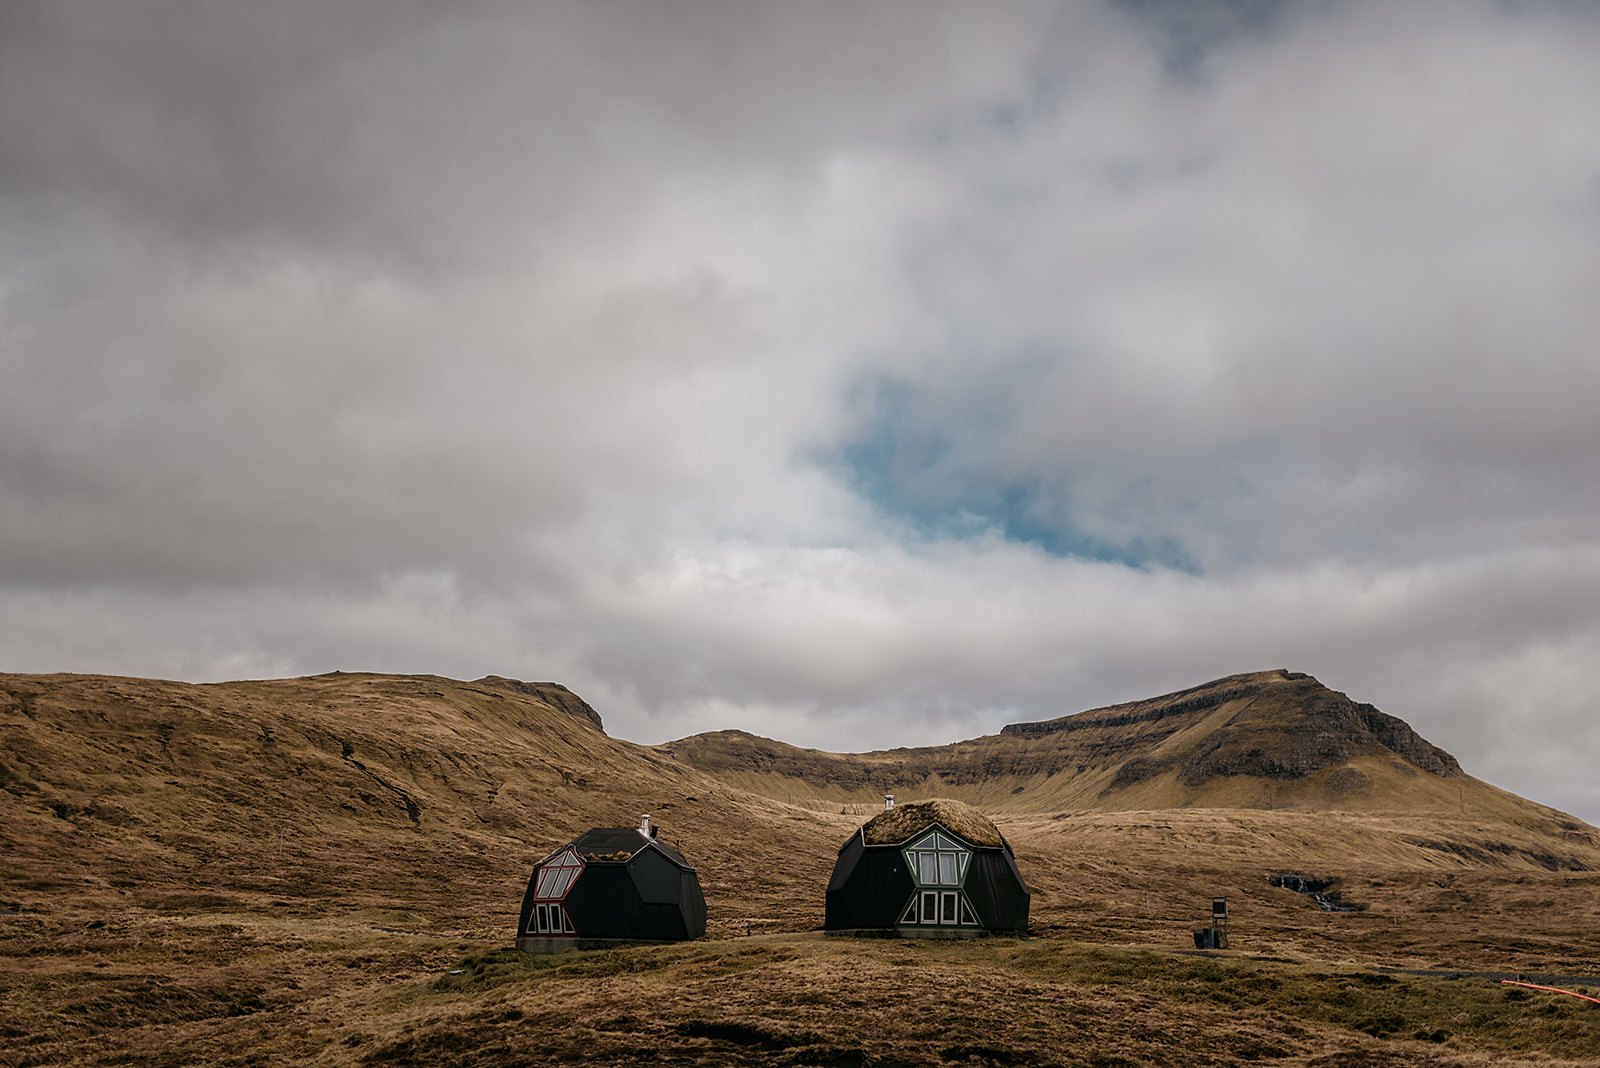 Cube cabins in remote mountain landscape